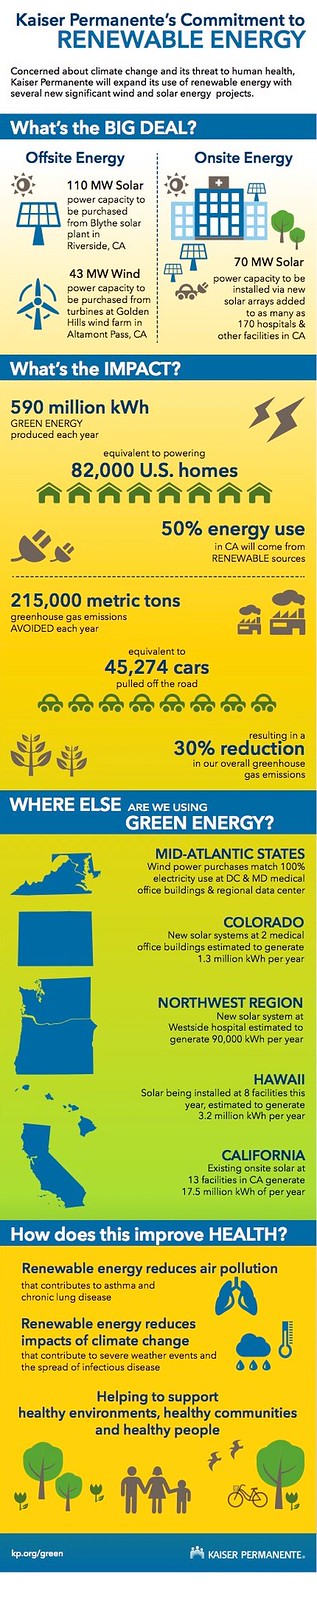 Renewable Energy Infographic 52943